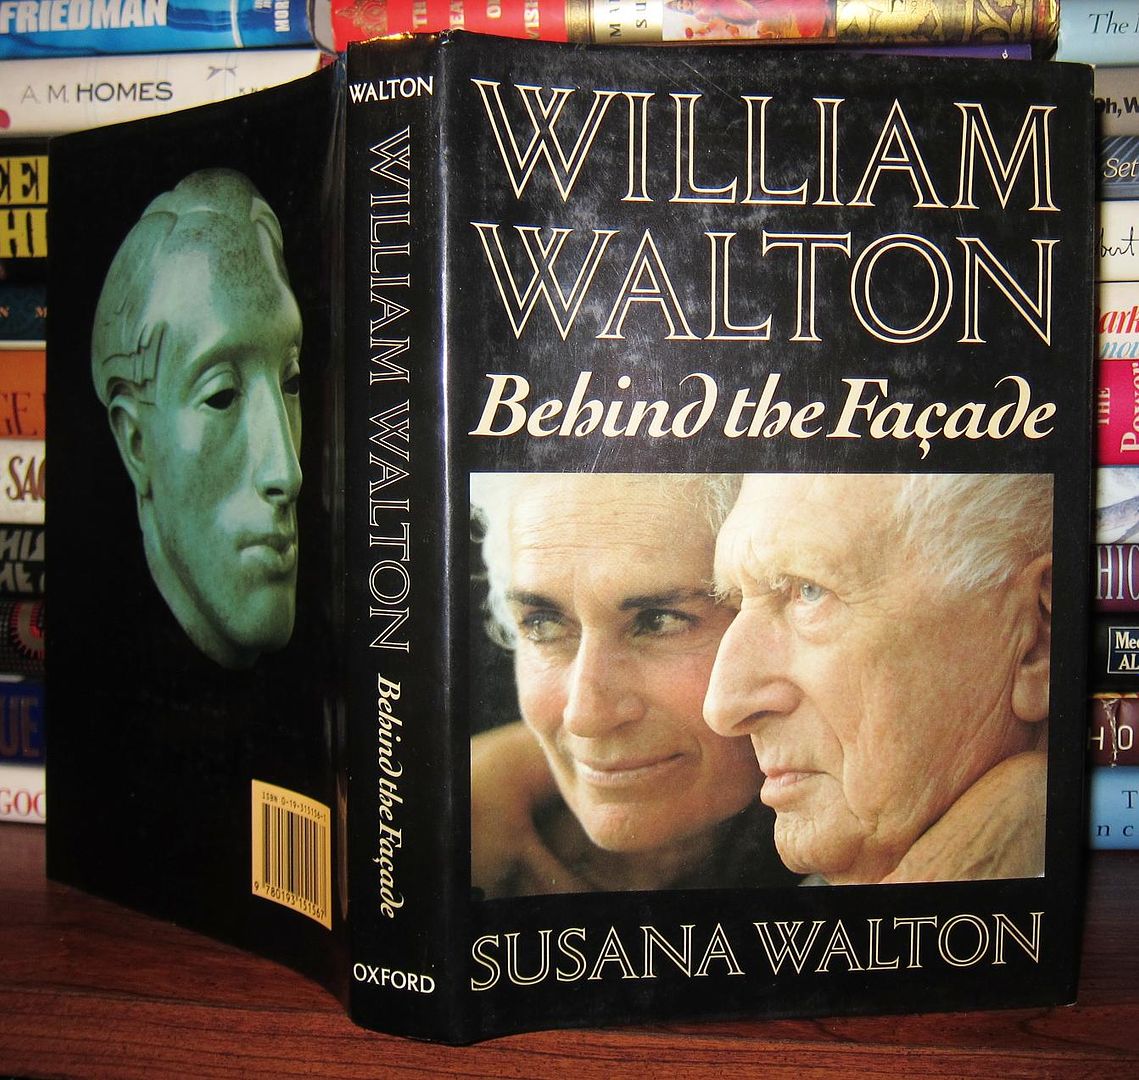 WALTON, SUSANA - William Walton Behind the Faade